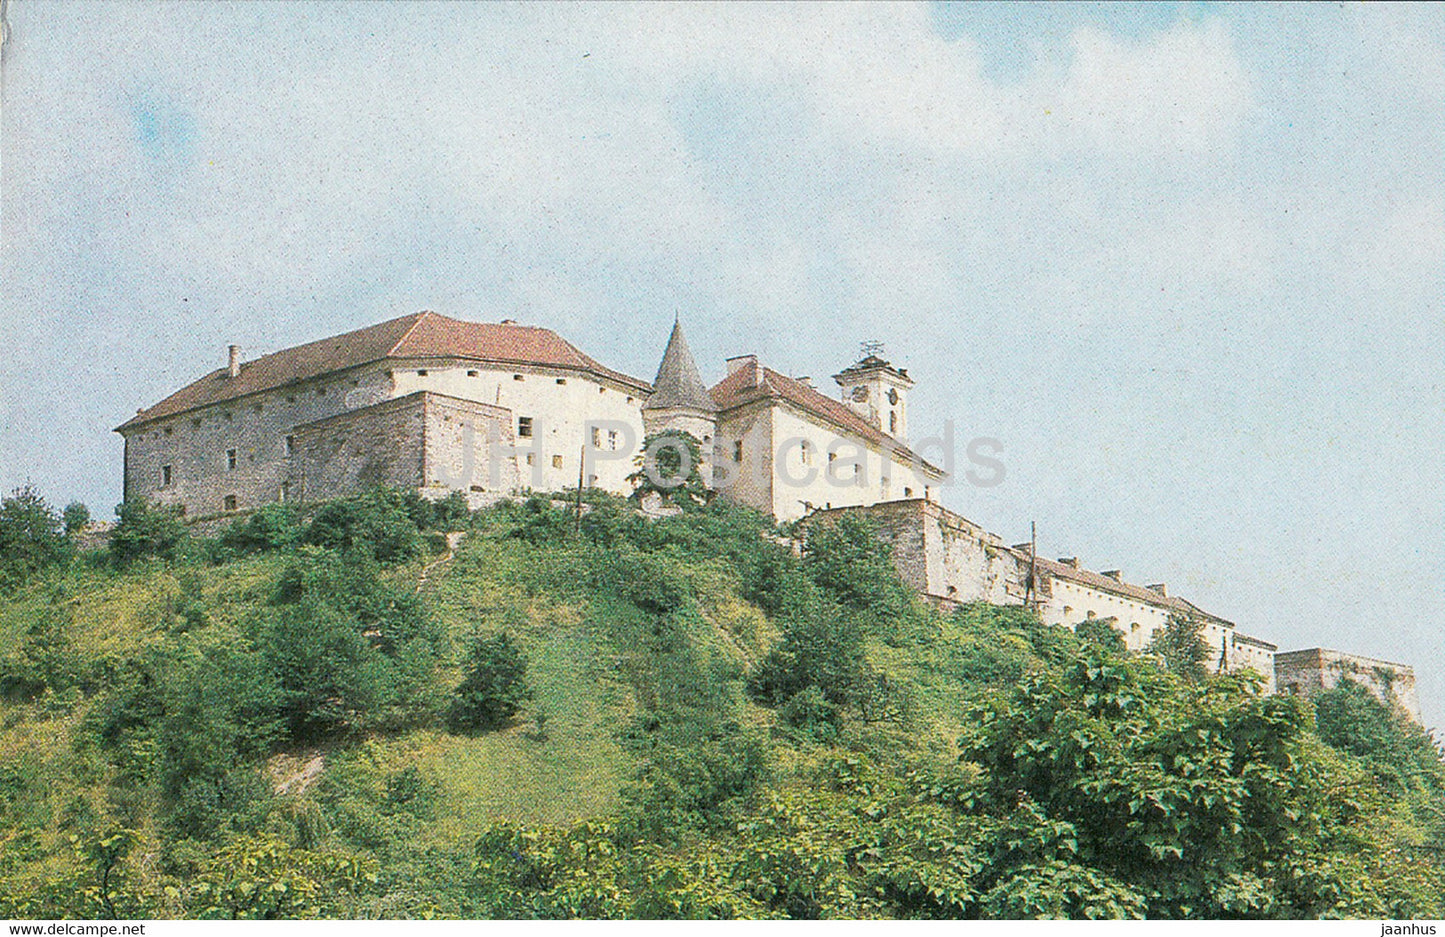 Mukachevo - castle Palanok - 1 - Ukraine USSR - unused - JH Postcards